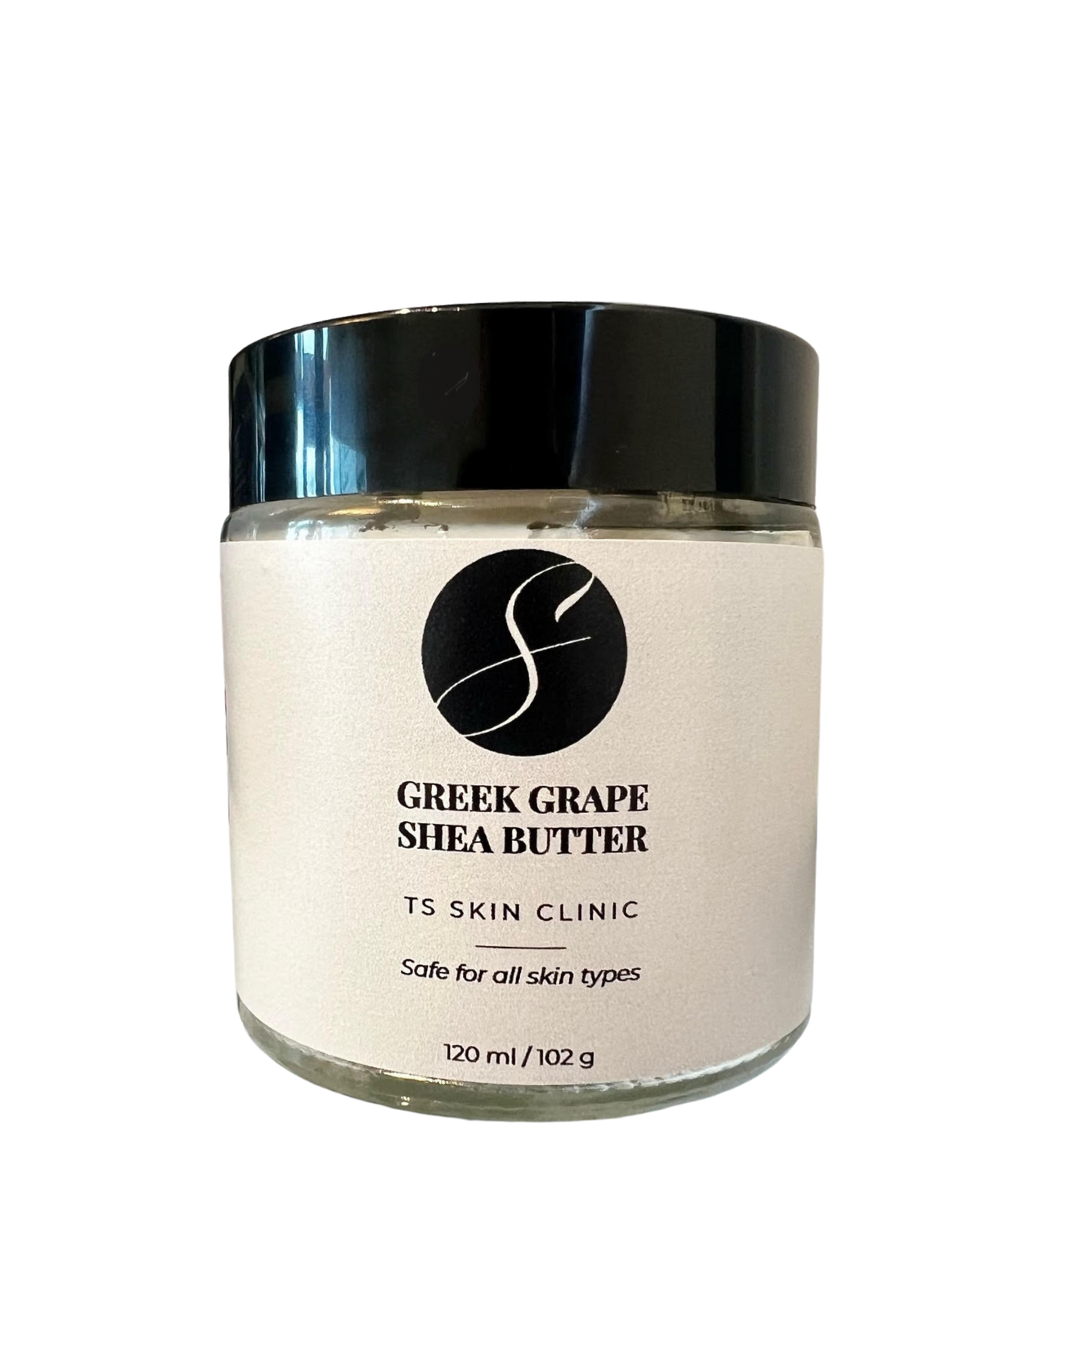 Greek Grape Shea Butter